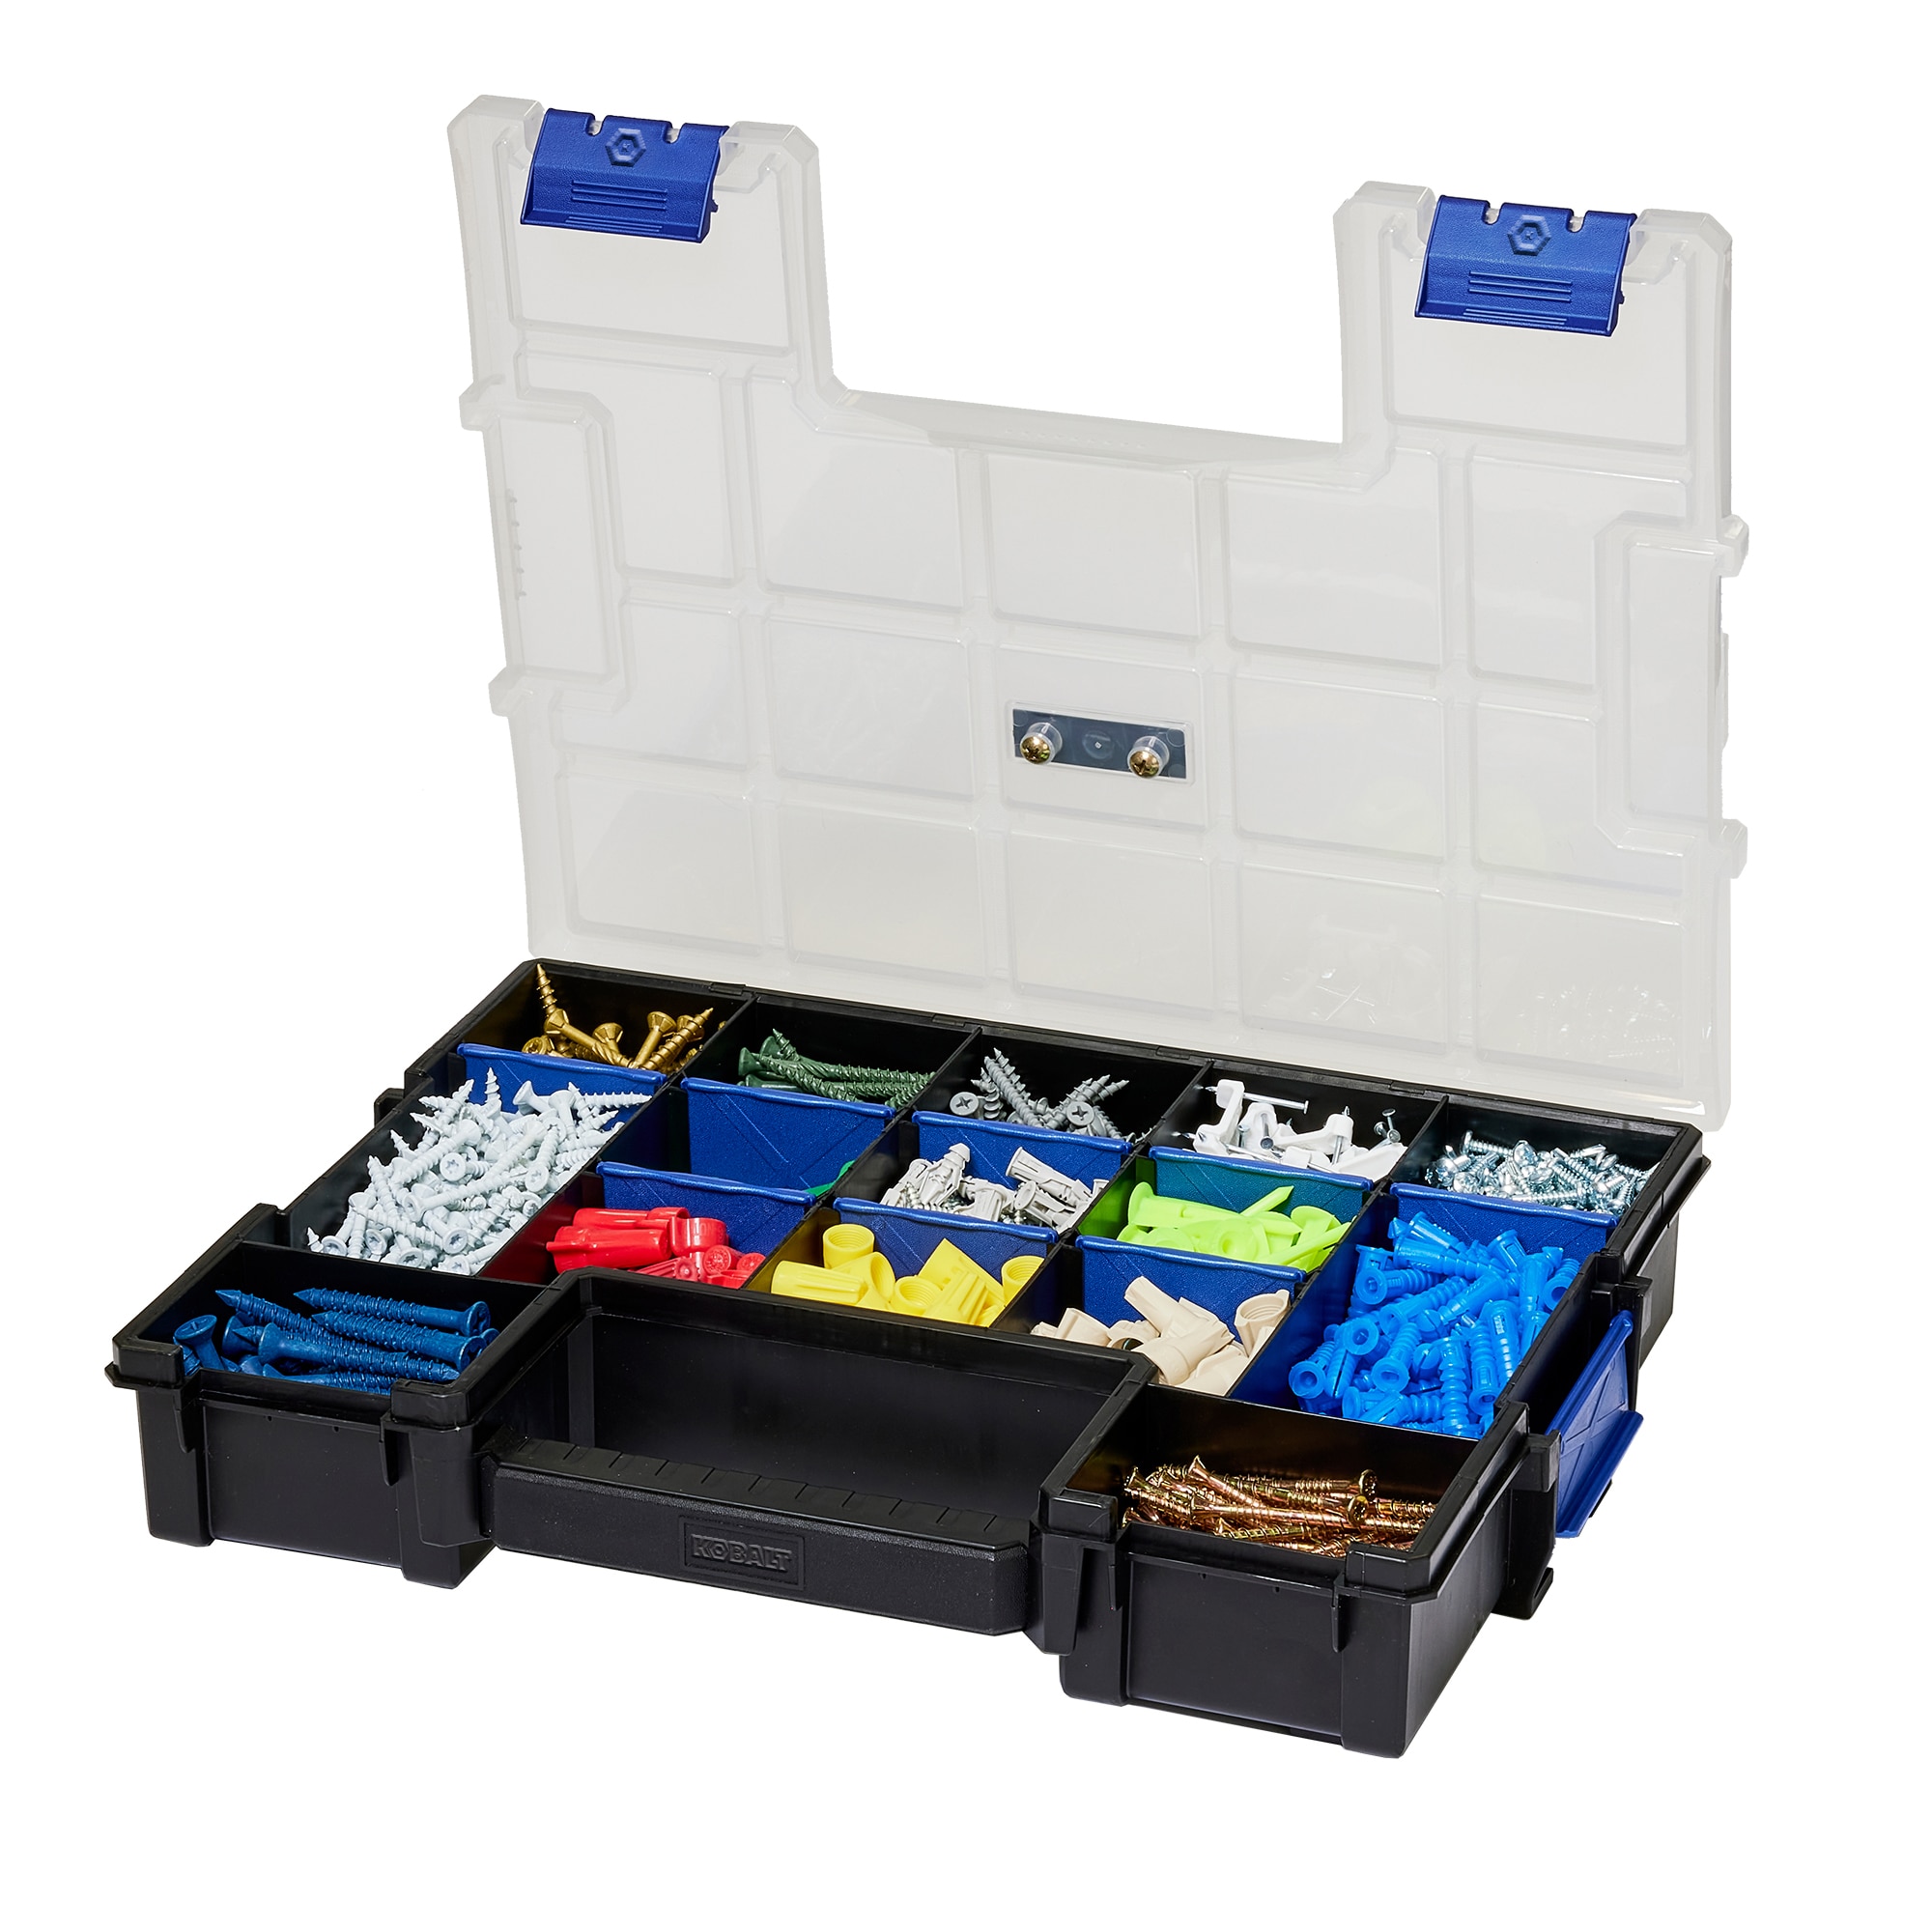 Kobalt Plastic 15-Compartment Plastic Small Parts Organizer in the